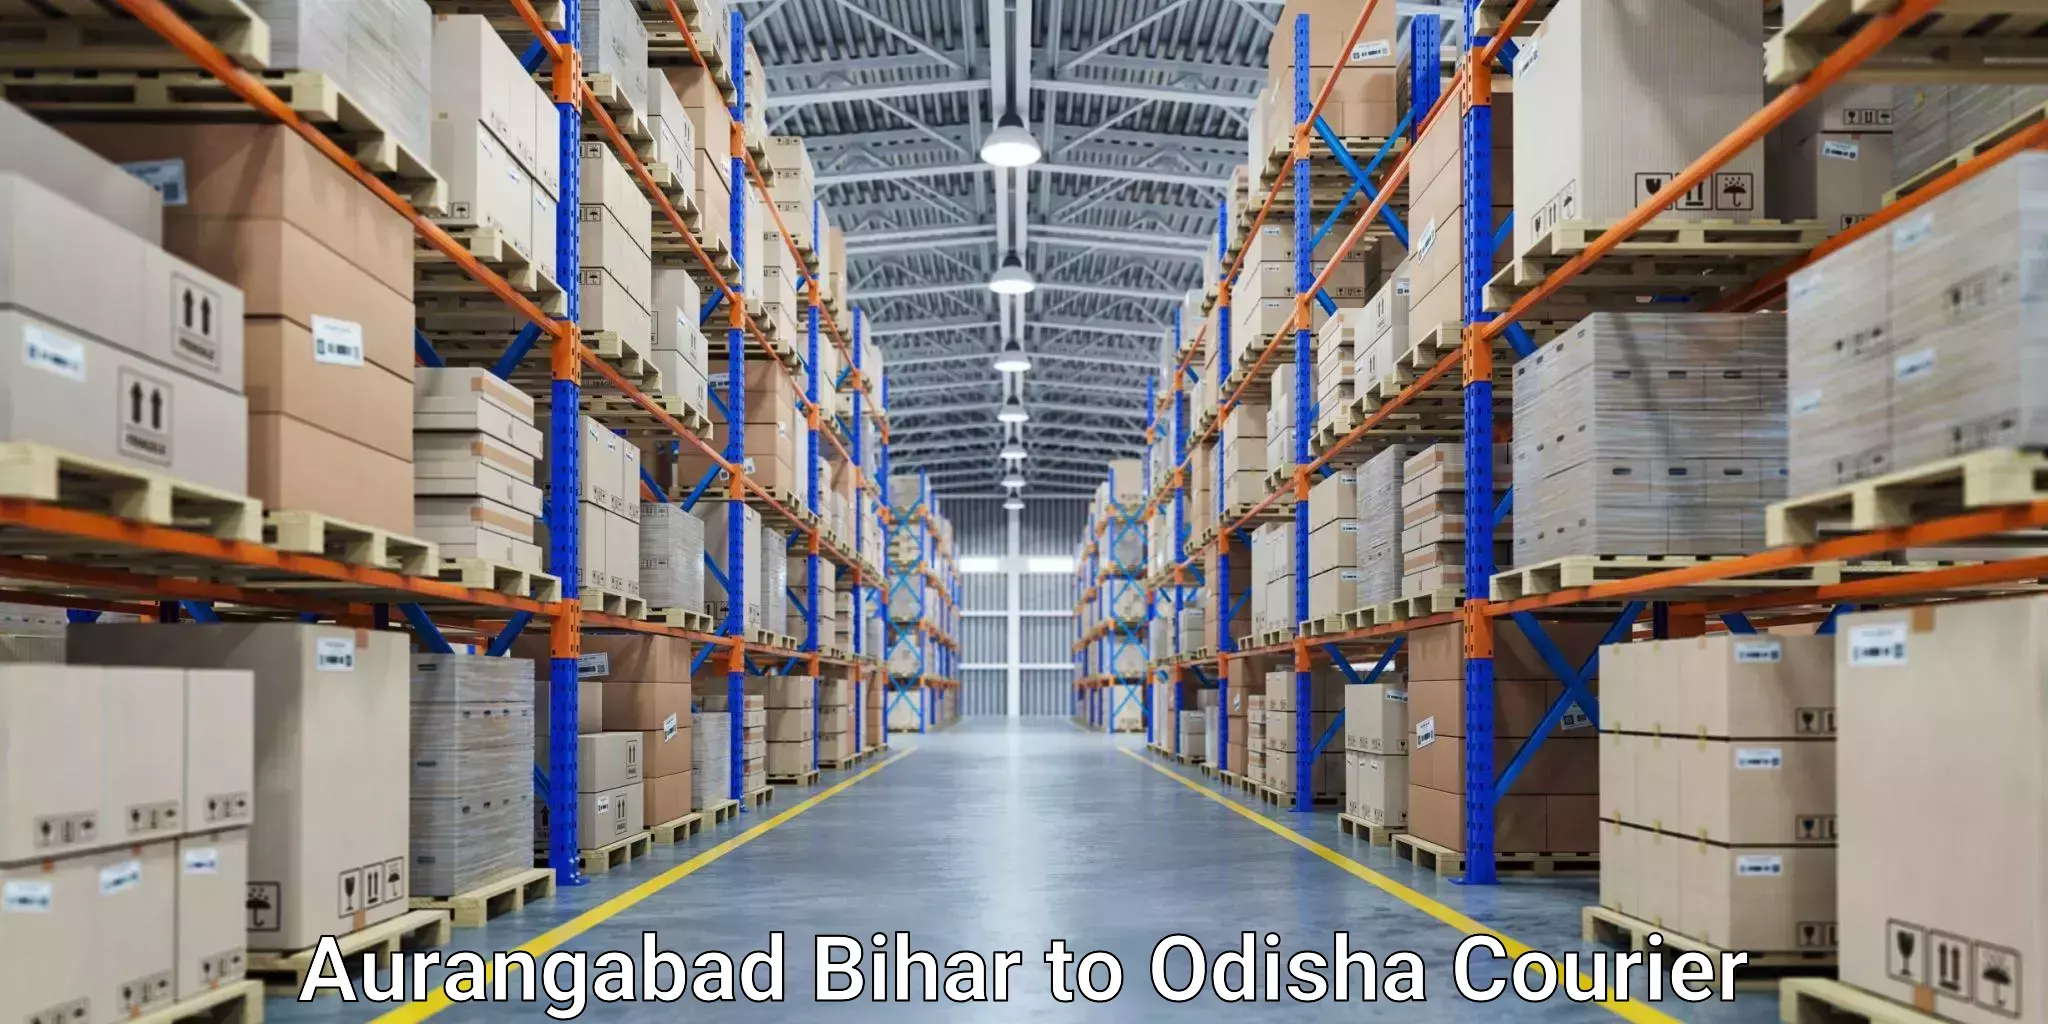 High-speed delivery Aurangabad Bihar to Kupari